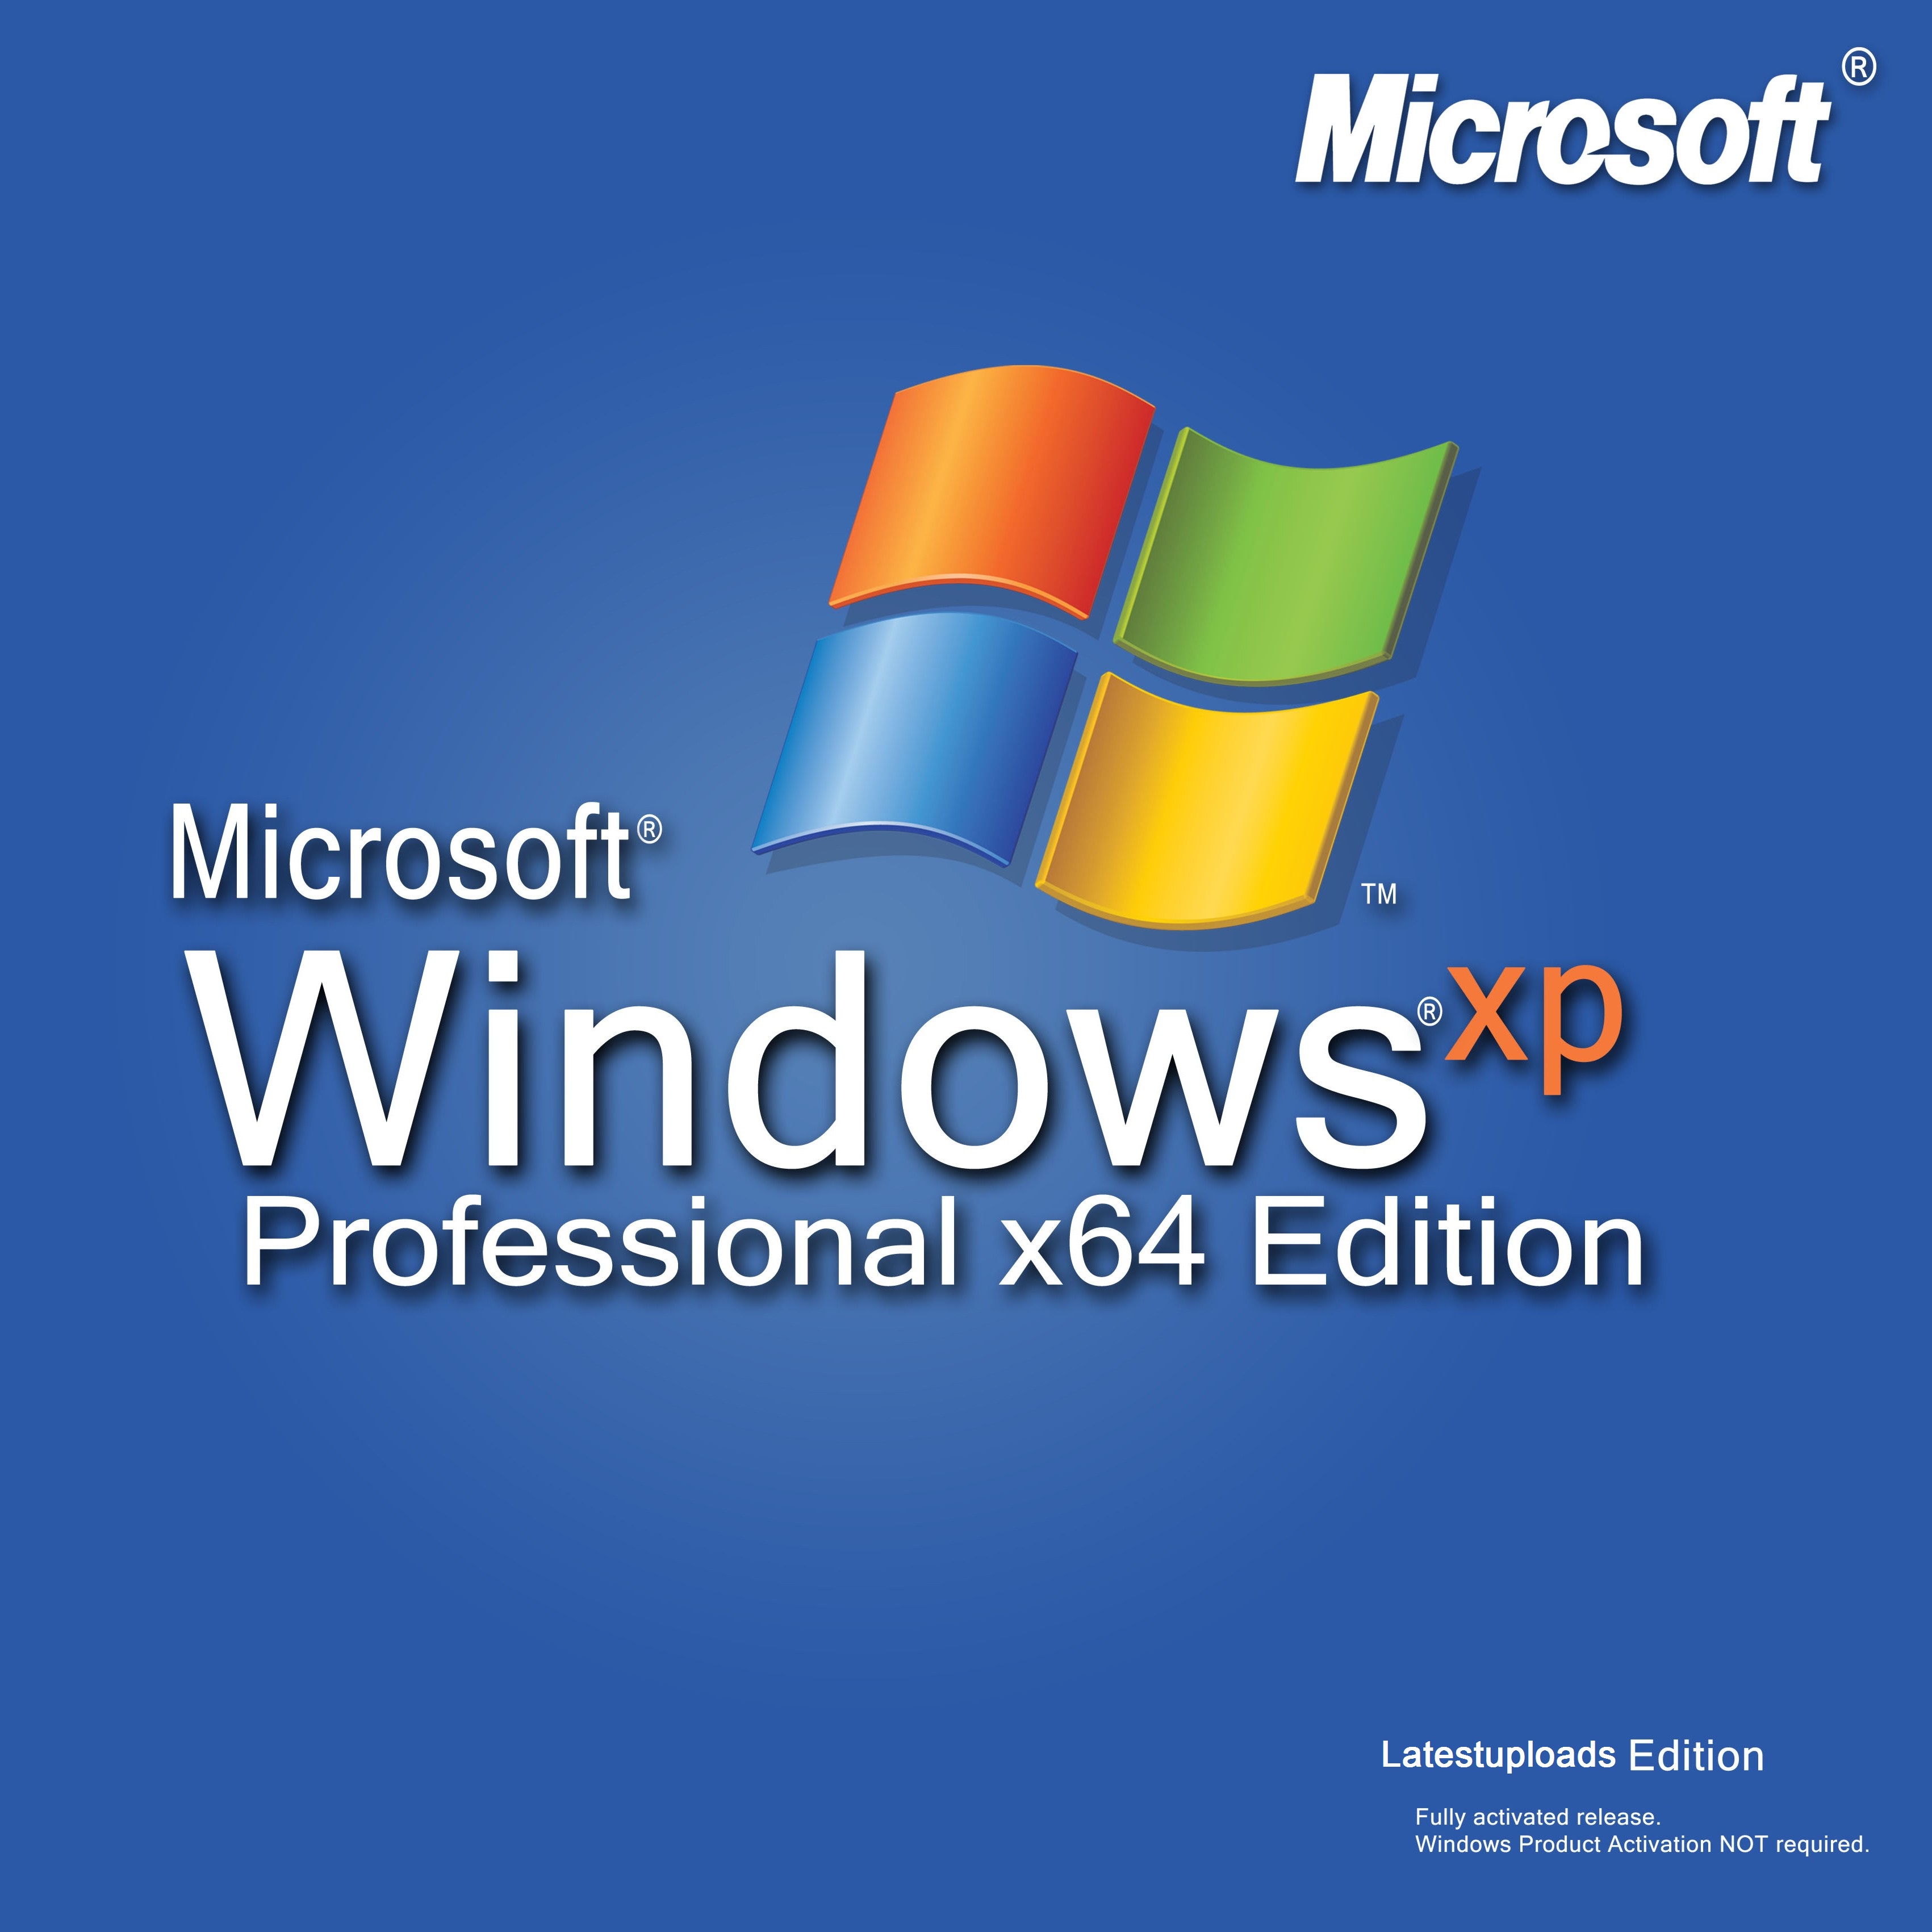 microsoft download center windows 7 64 bit